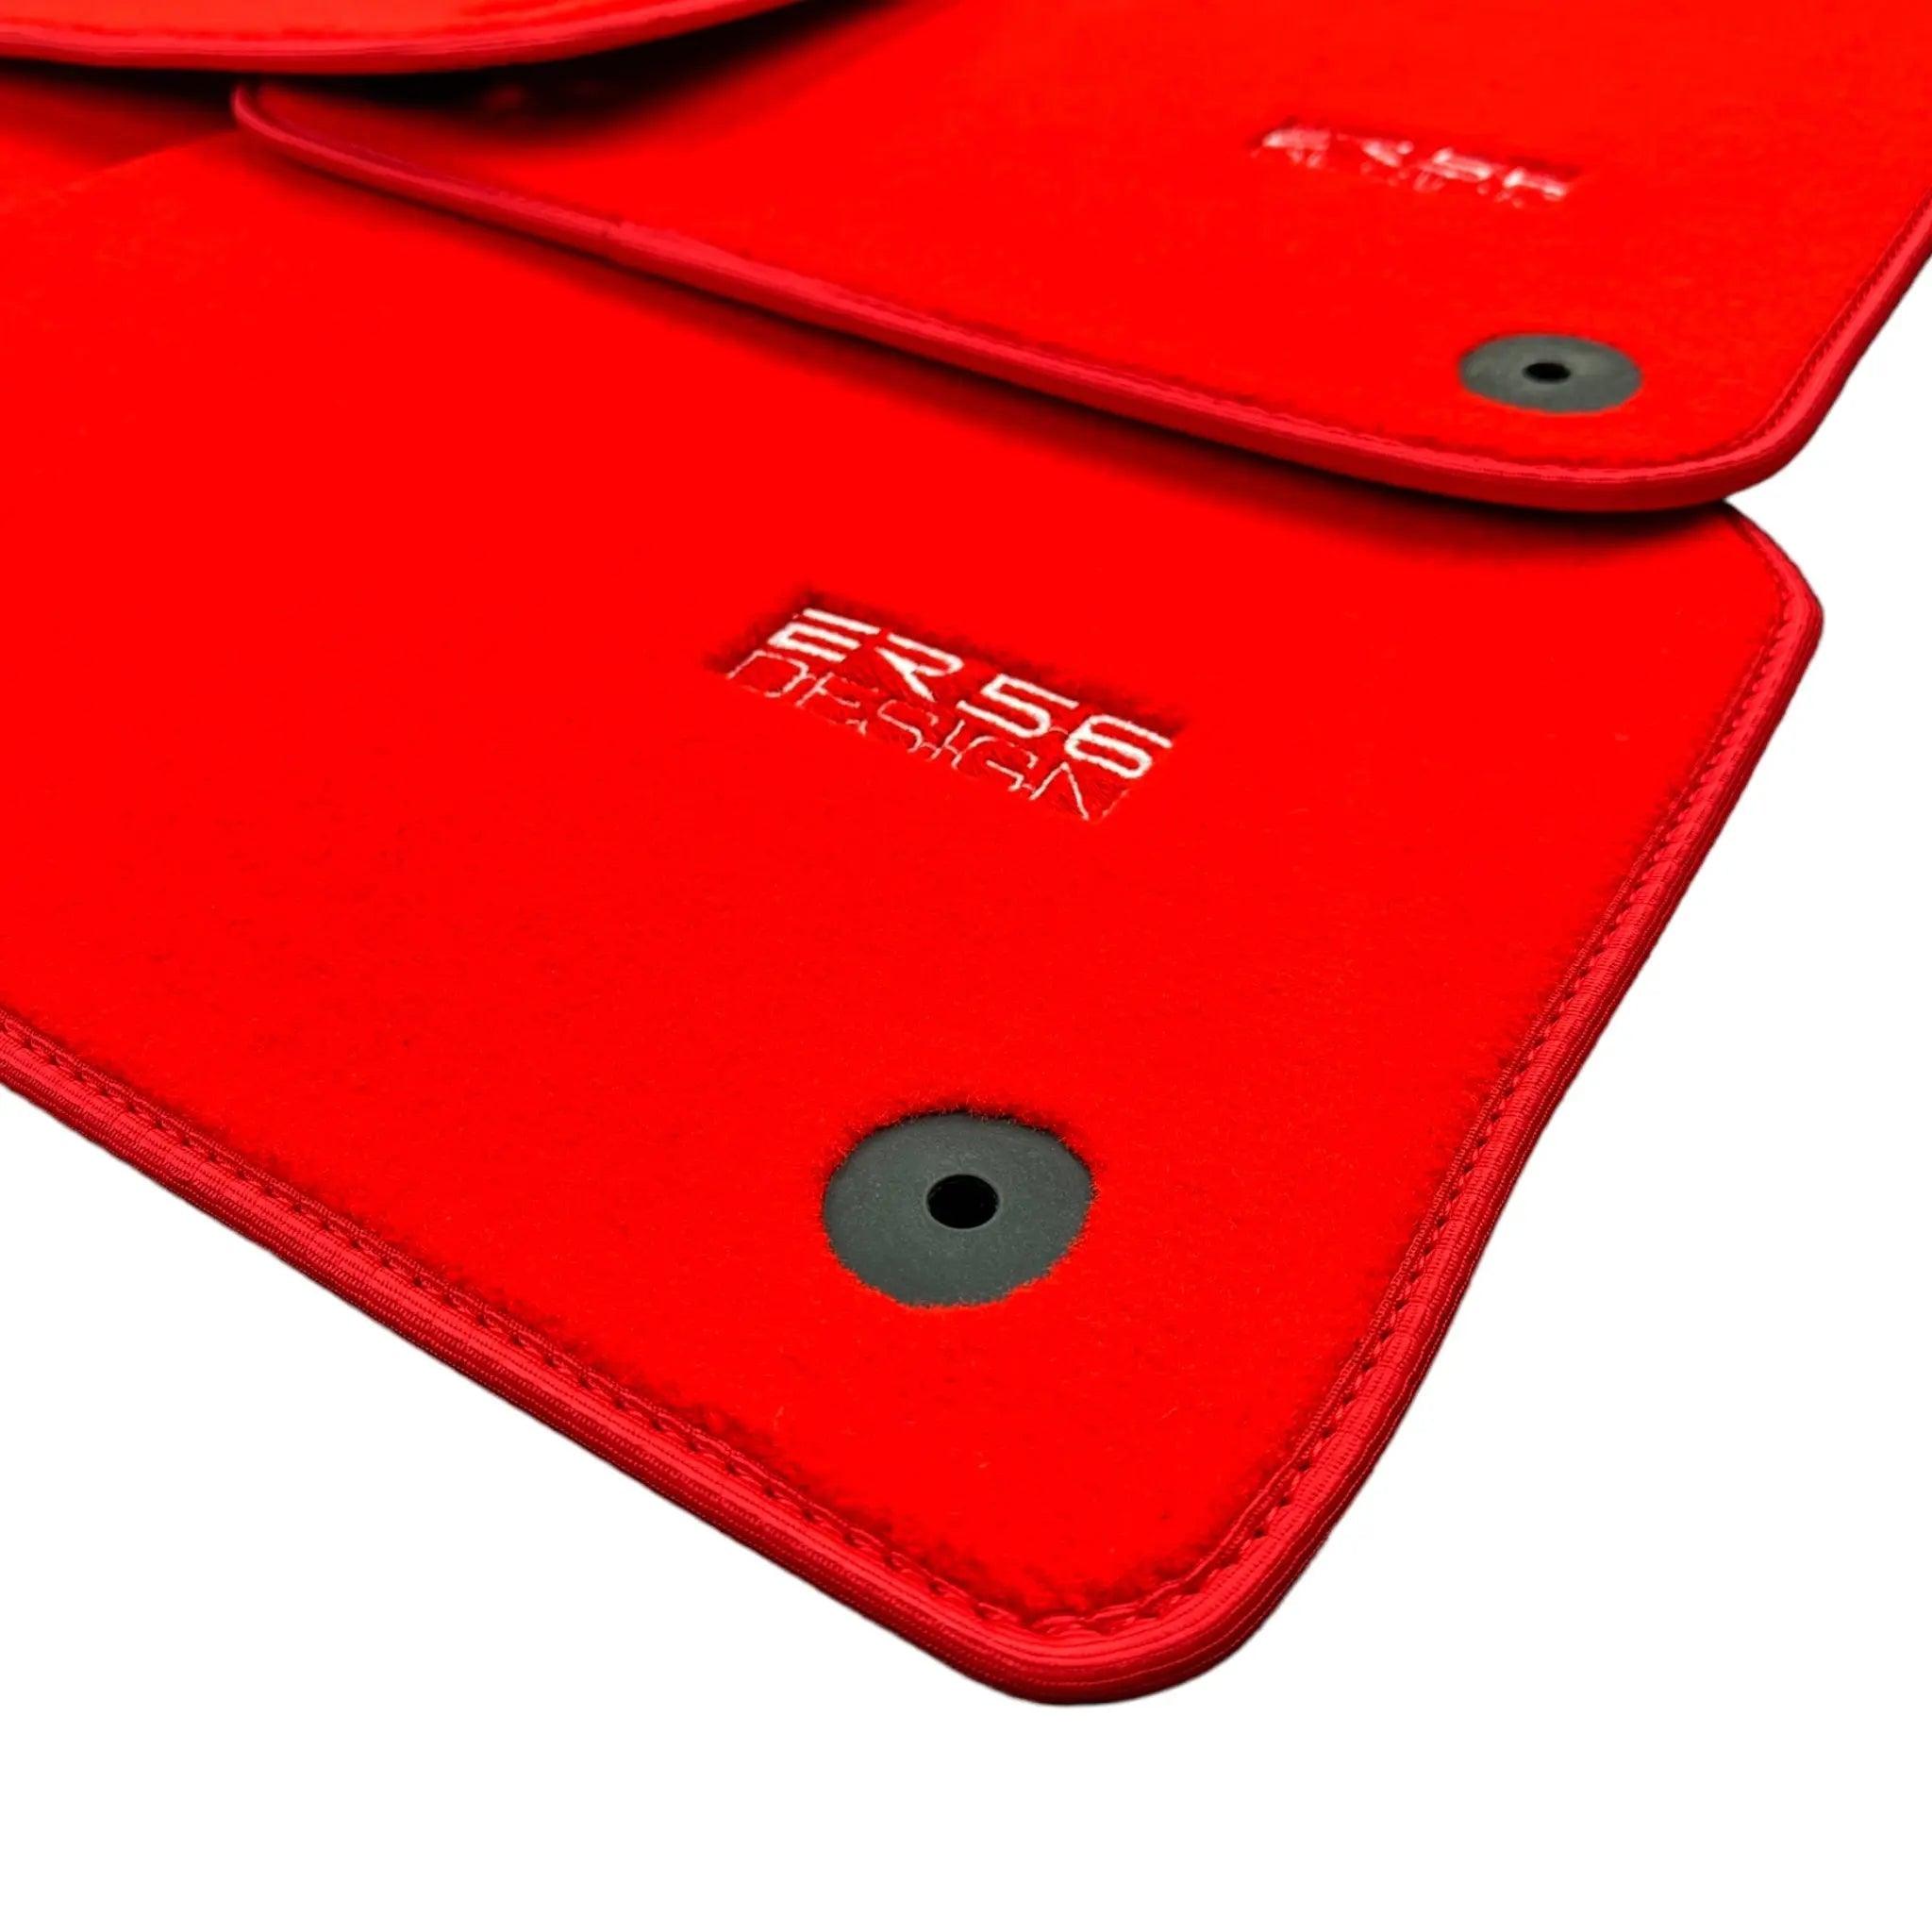 Red Floor Mats for Audi A3 - 5-door Sportback (2021 - 2024) | ER56 Design